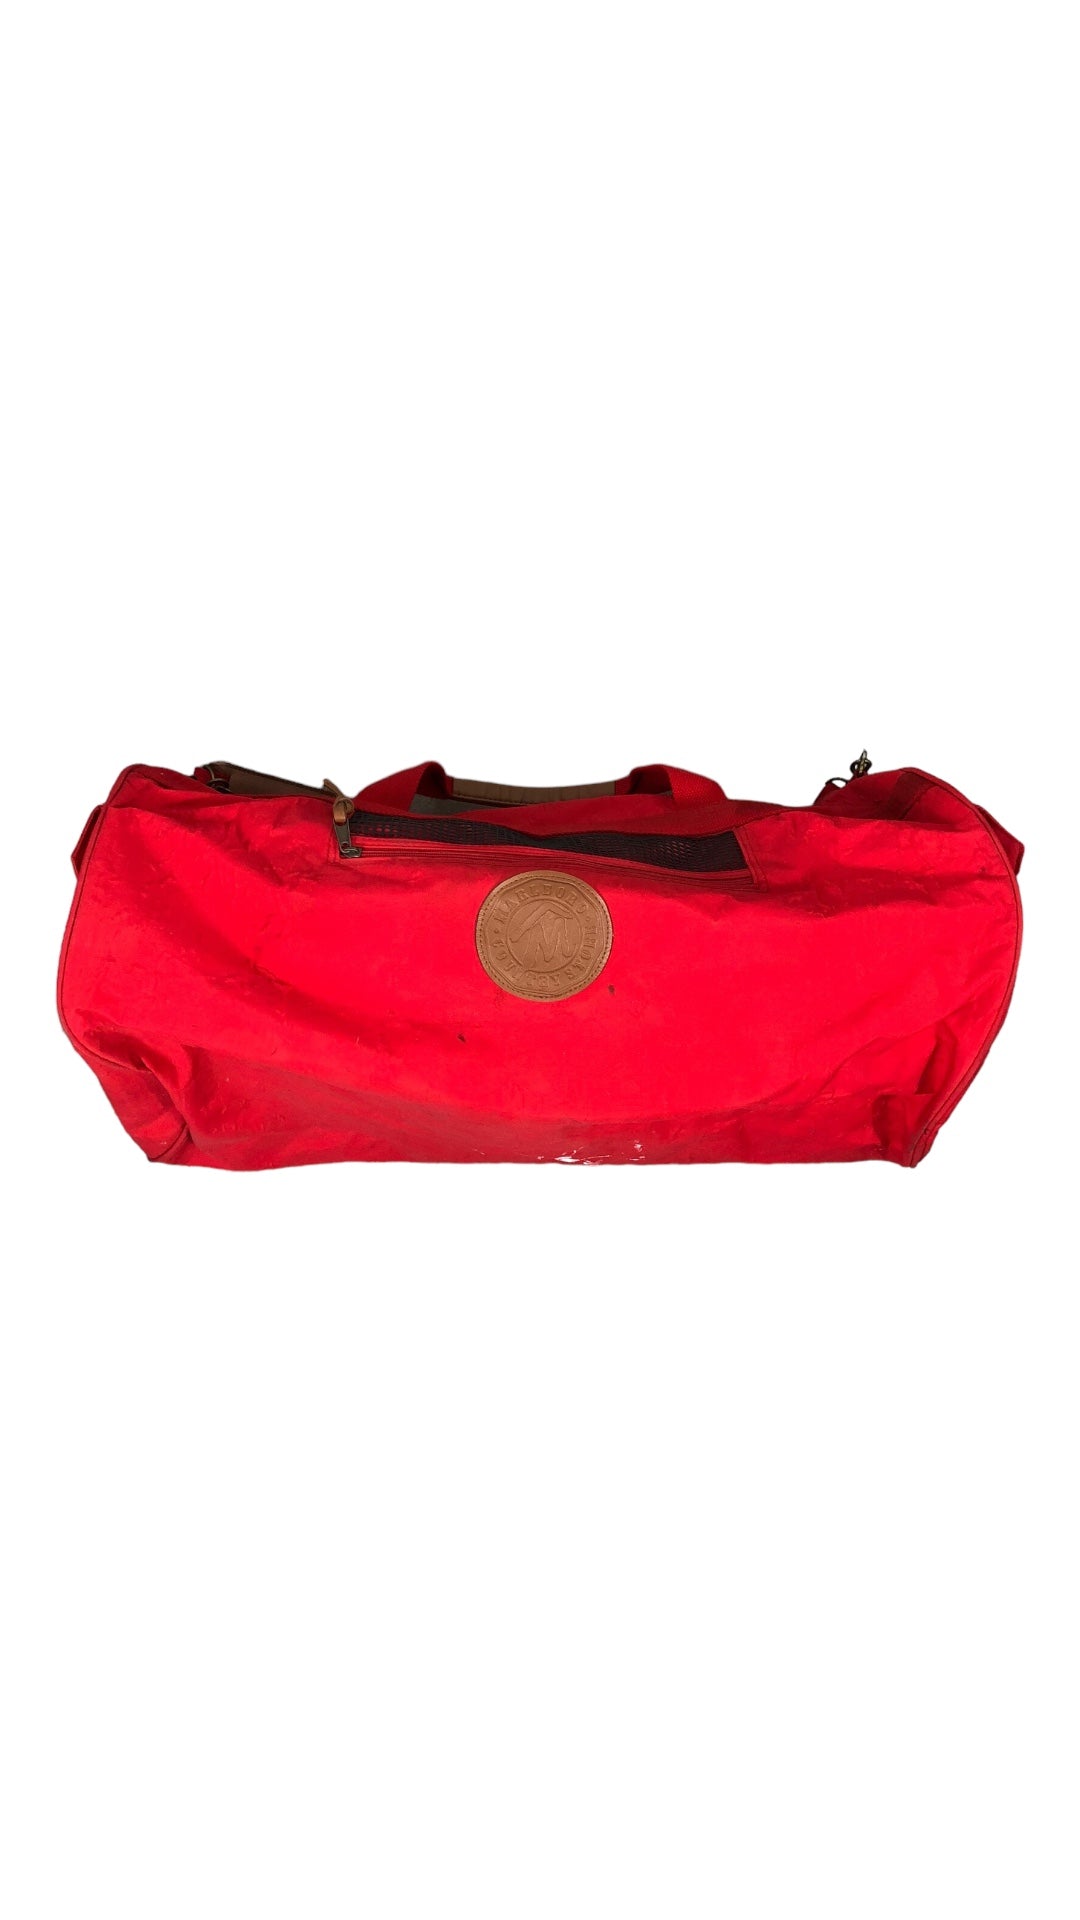 VTG Marlboro Red Duffel Bag